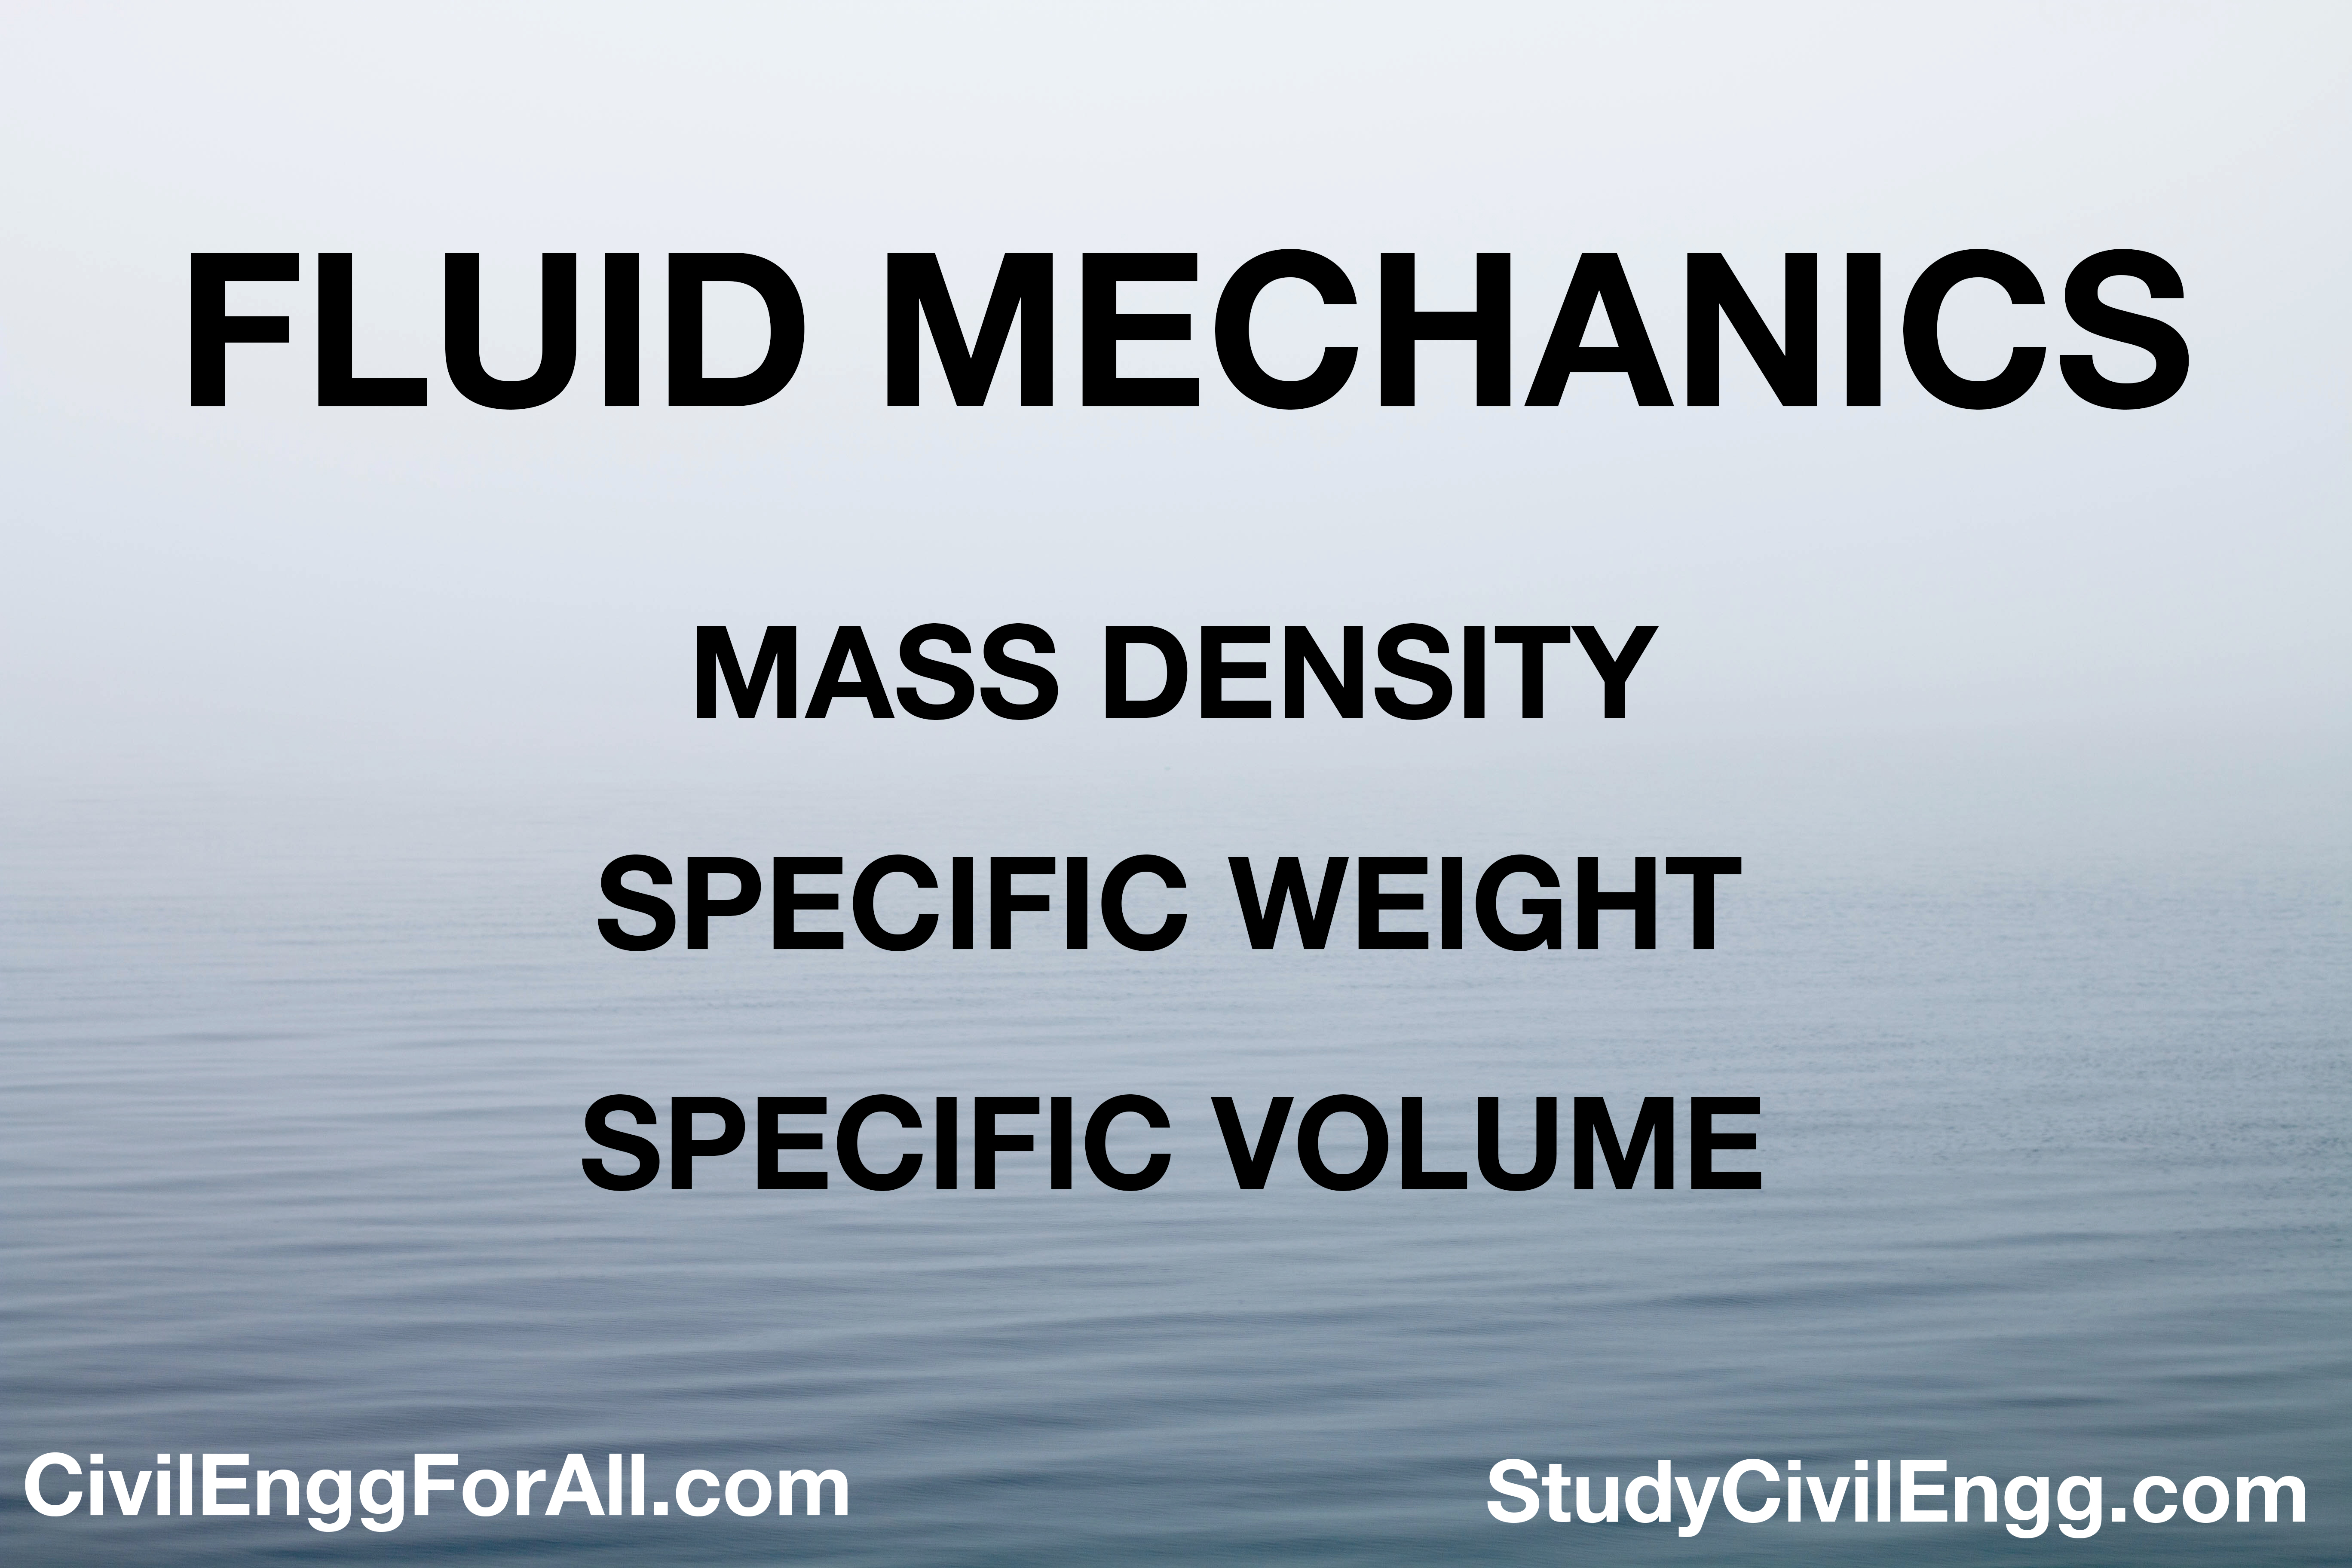 Mass Density, Specific Weight, Specific Volume - Fluid Mechanics (StudyCivilEngg.com)